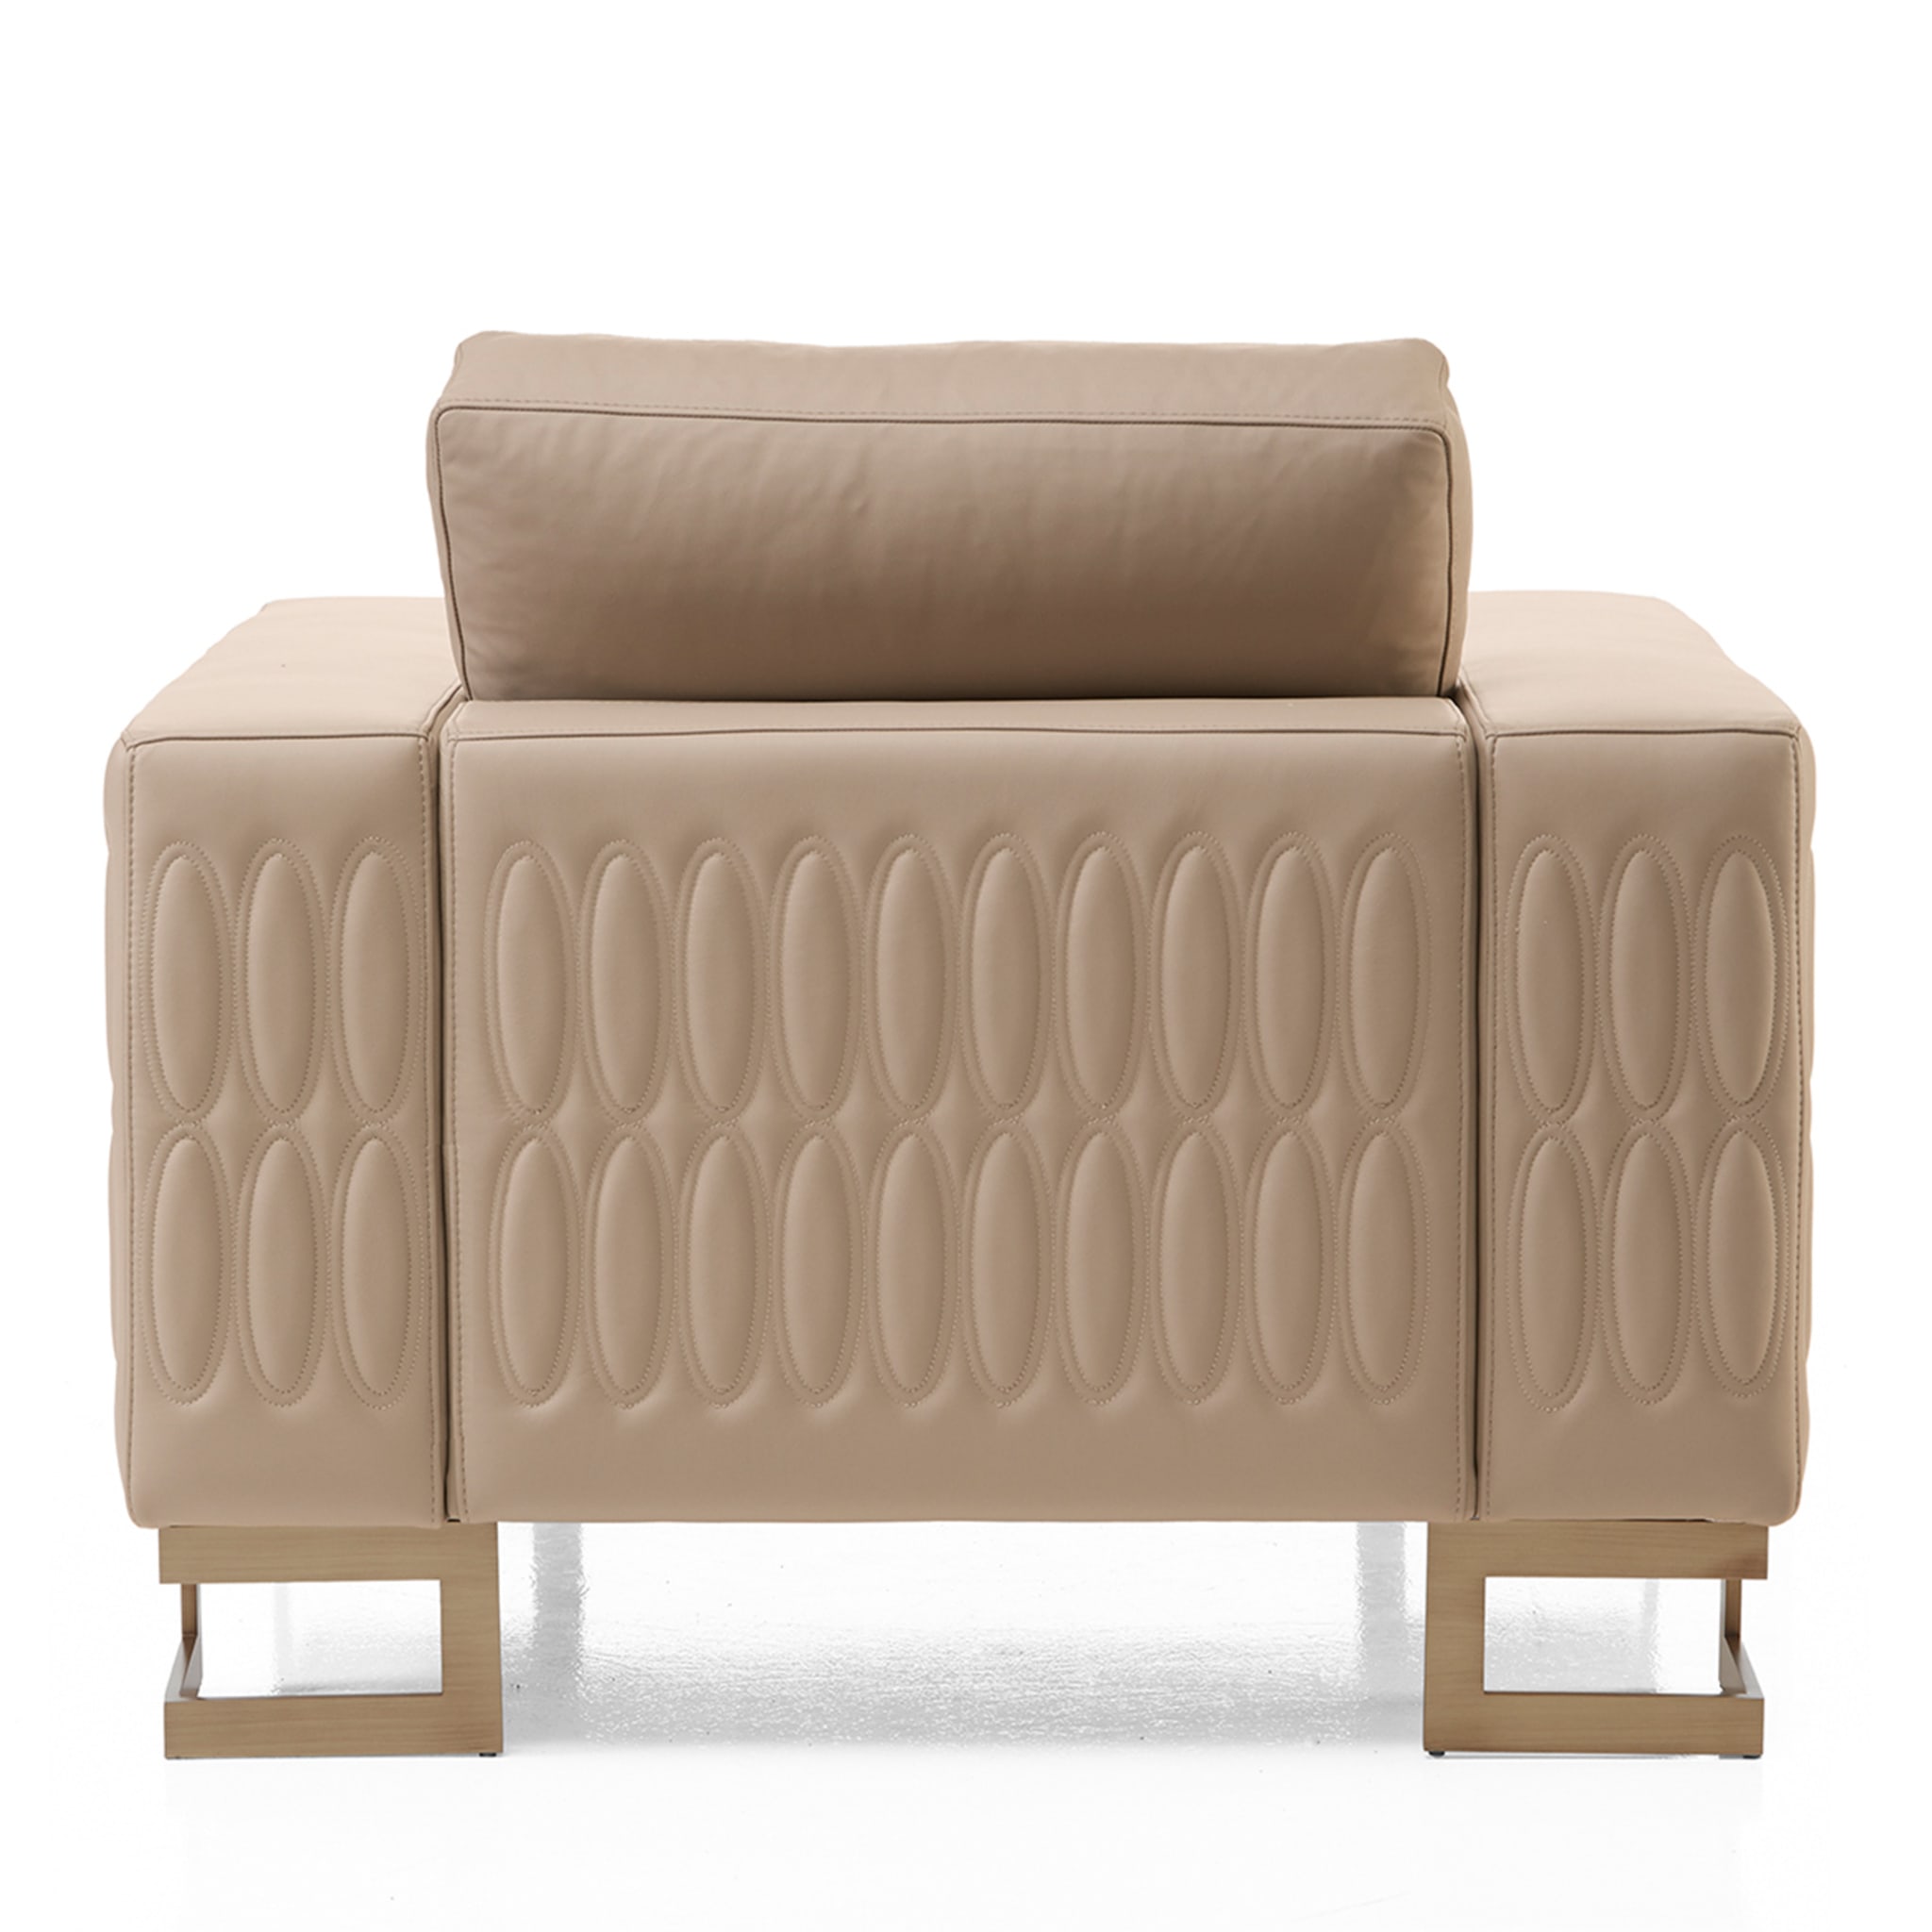 Zaffiro Square-Based Beige Armchair - Alternative view 1